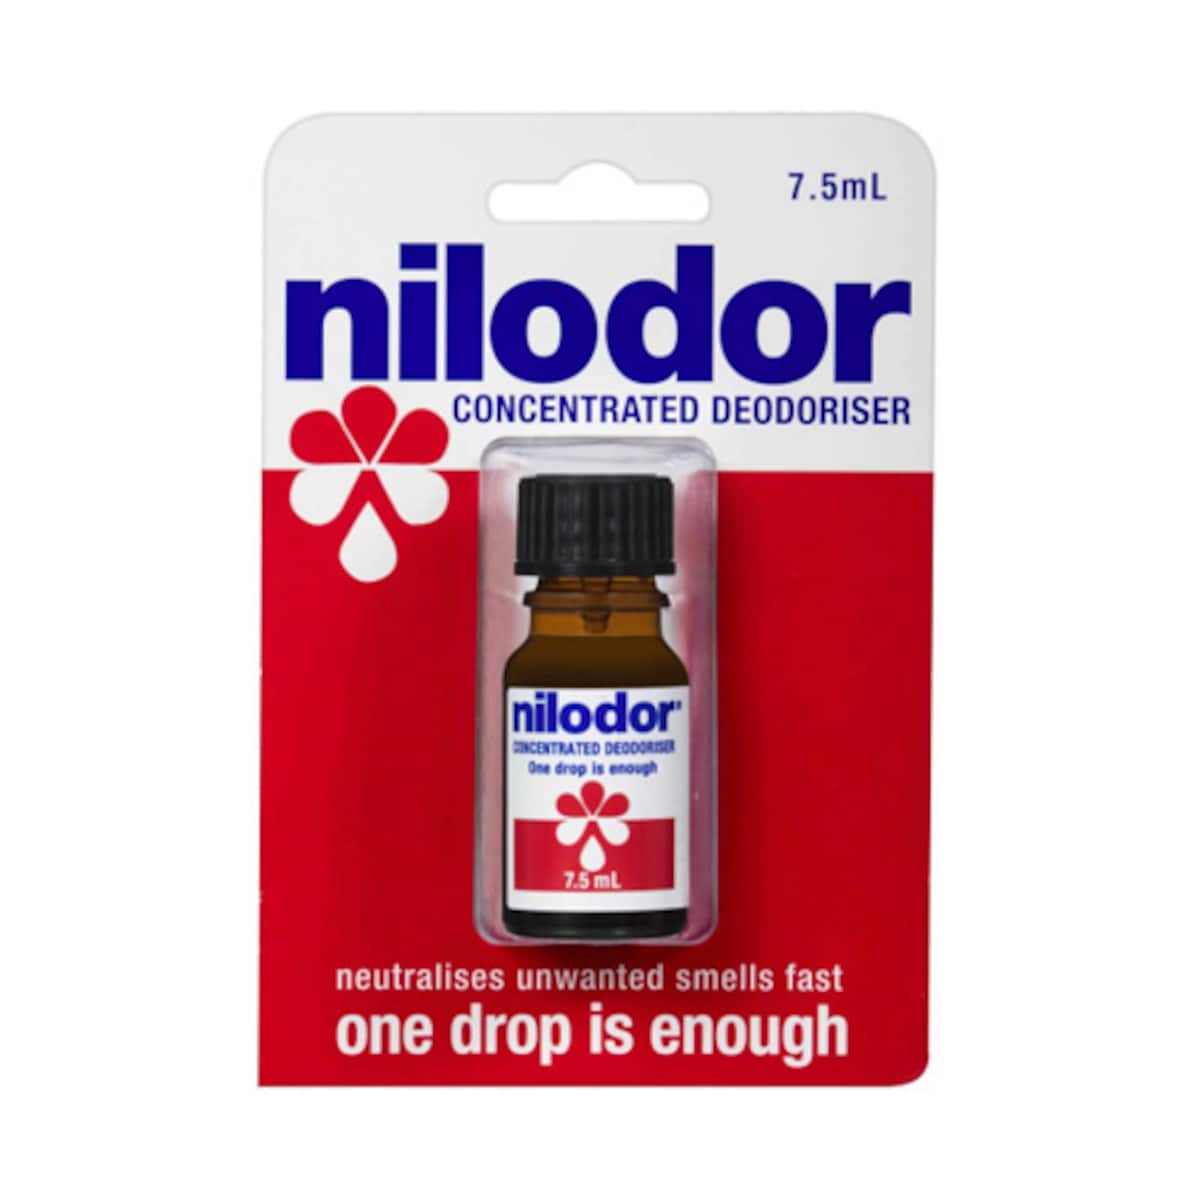 Nilodor Concentrated Deodoriser 7.5ml